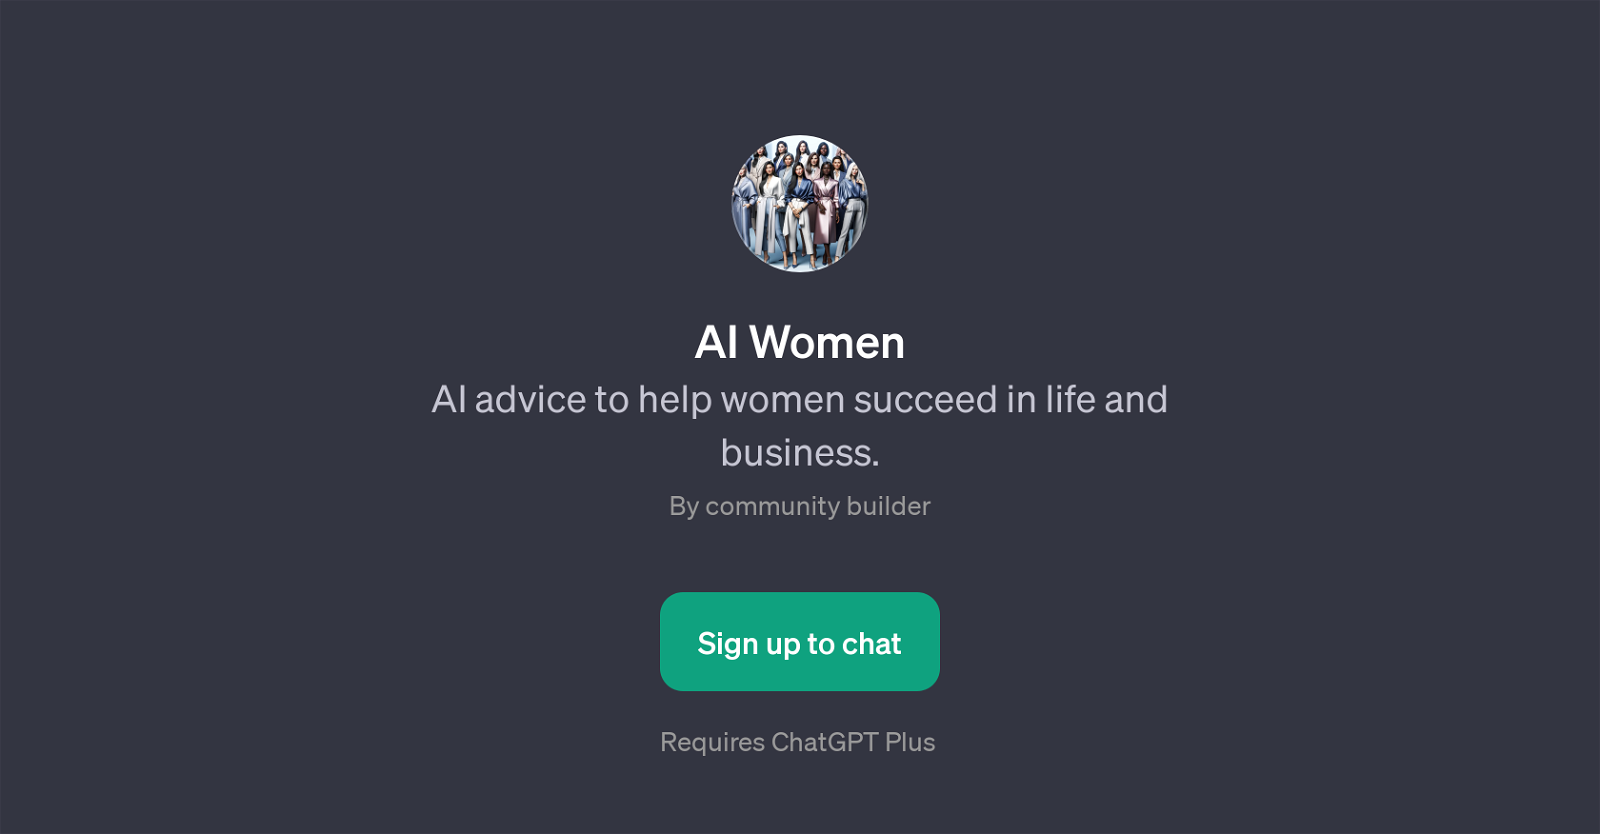 AI Women website